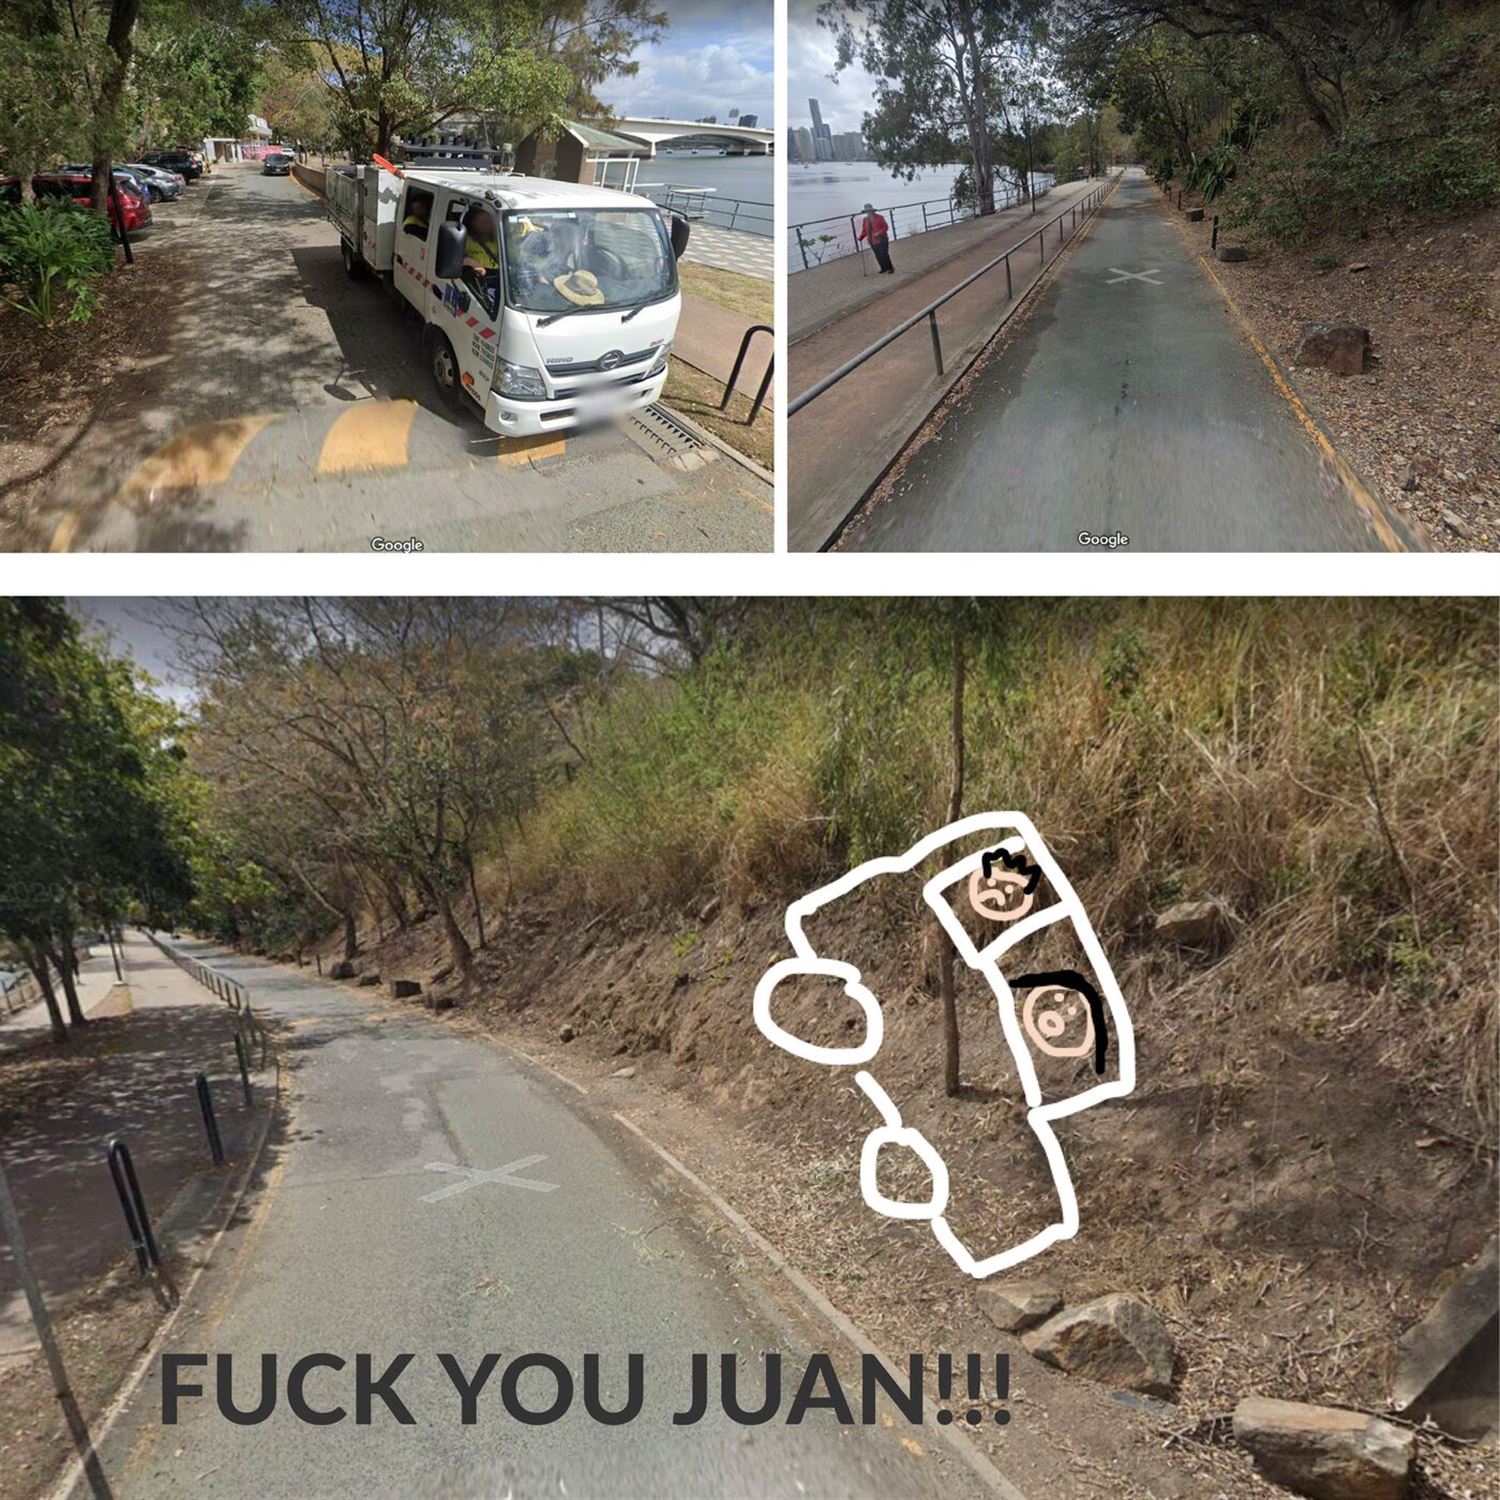 Juan on the narrow road